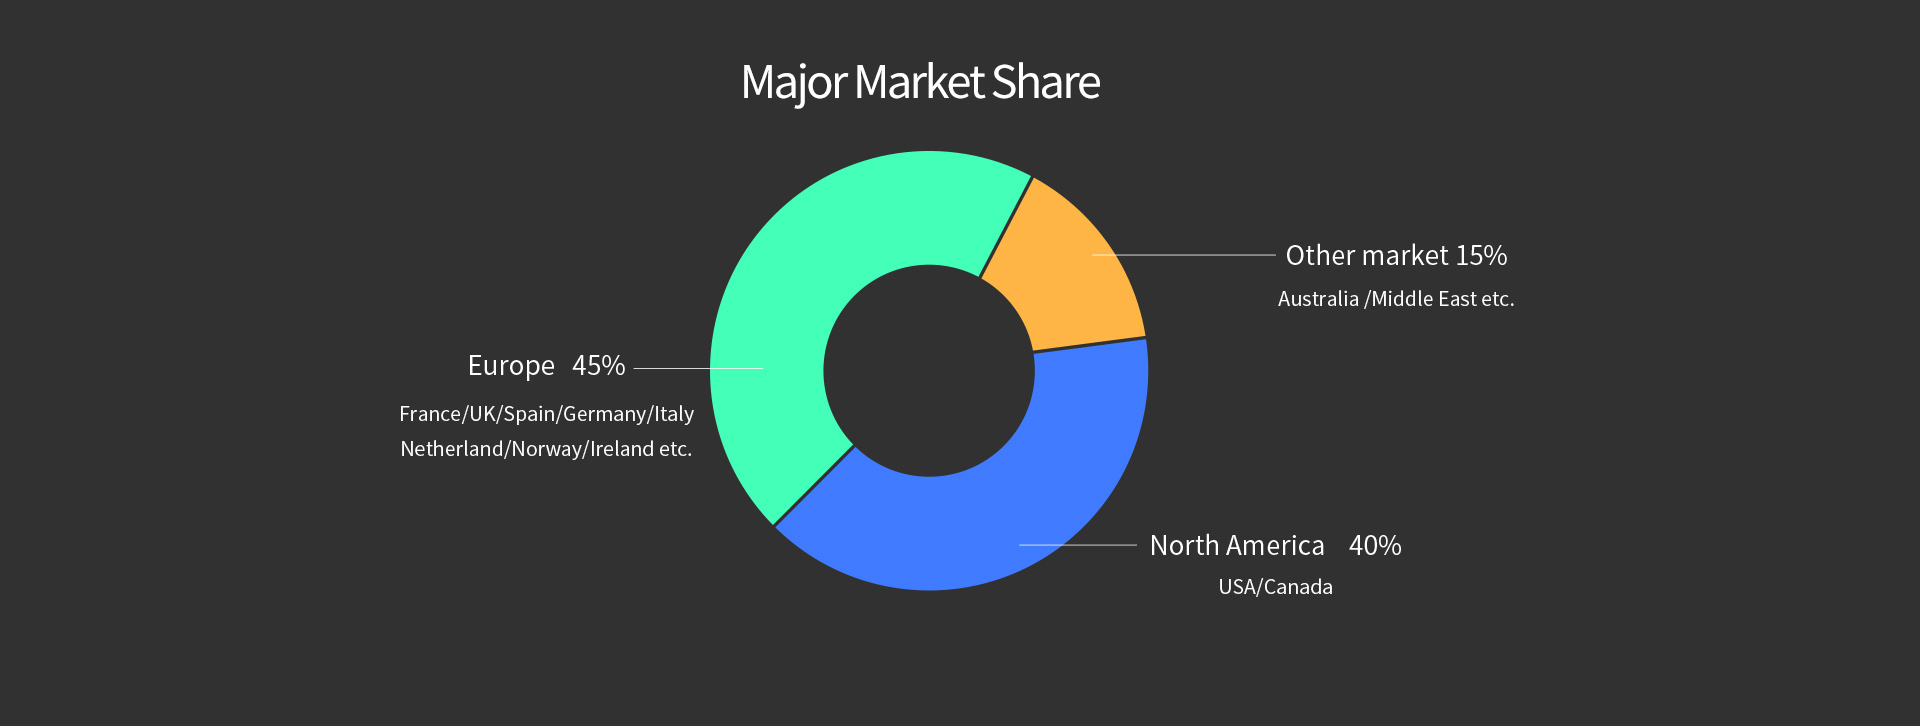 major market share